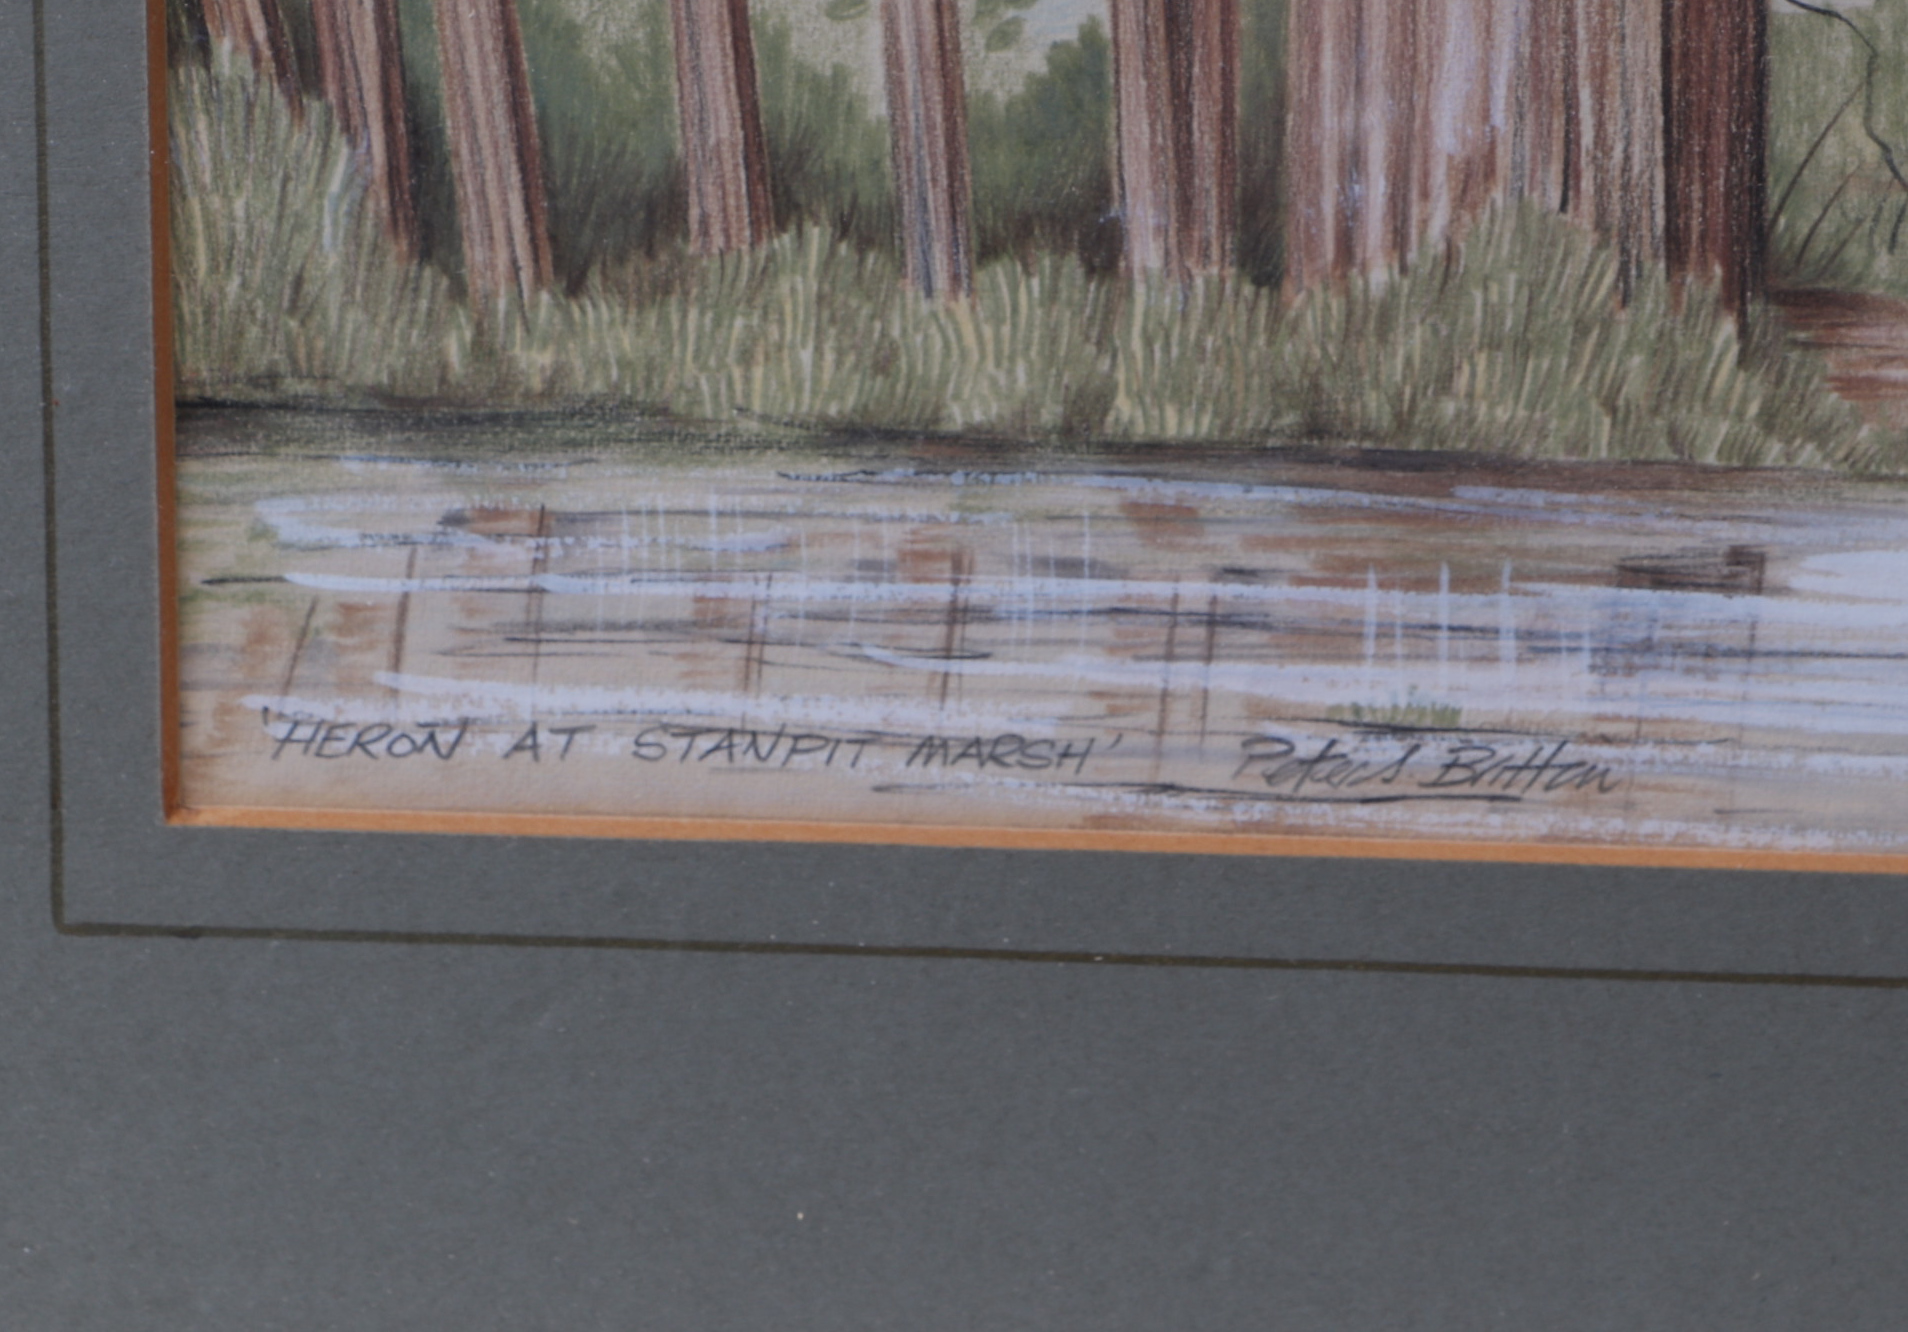 Peter Britton - 'Heron at Stanpit Marsh', signed lower left corner, framed and glazed. 52 by 22cm - Image 3 of 3